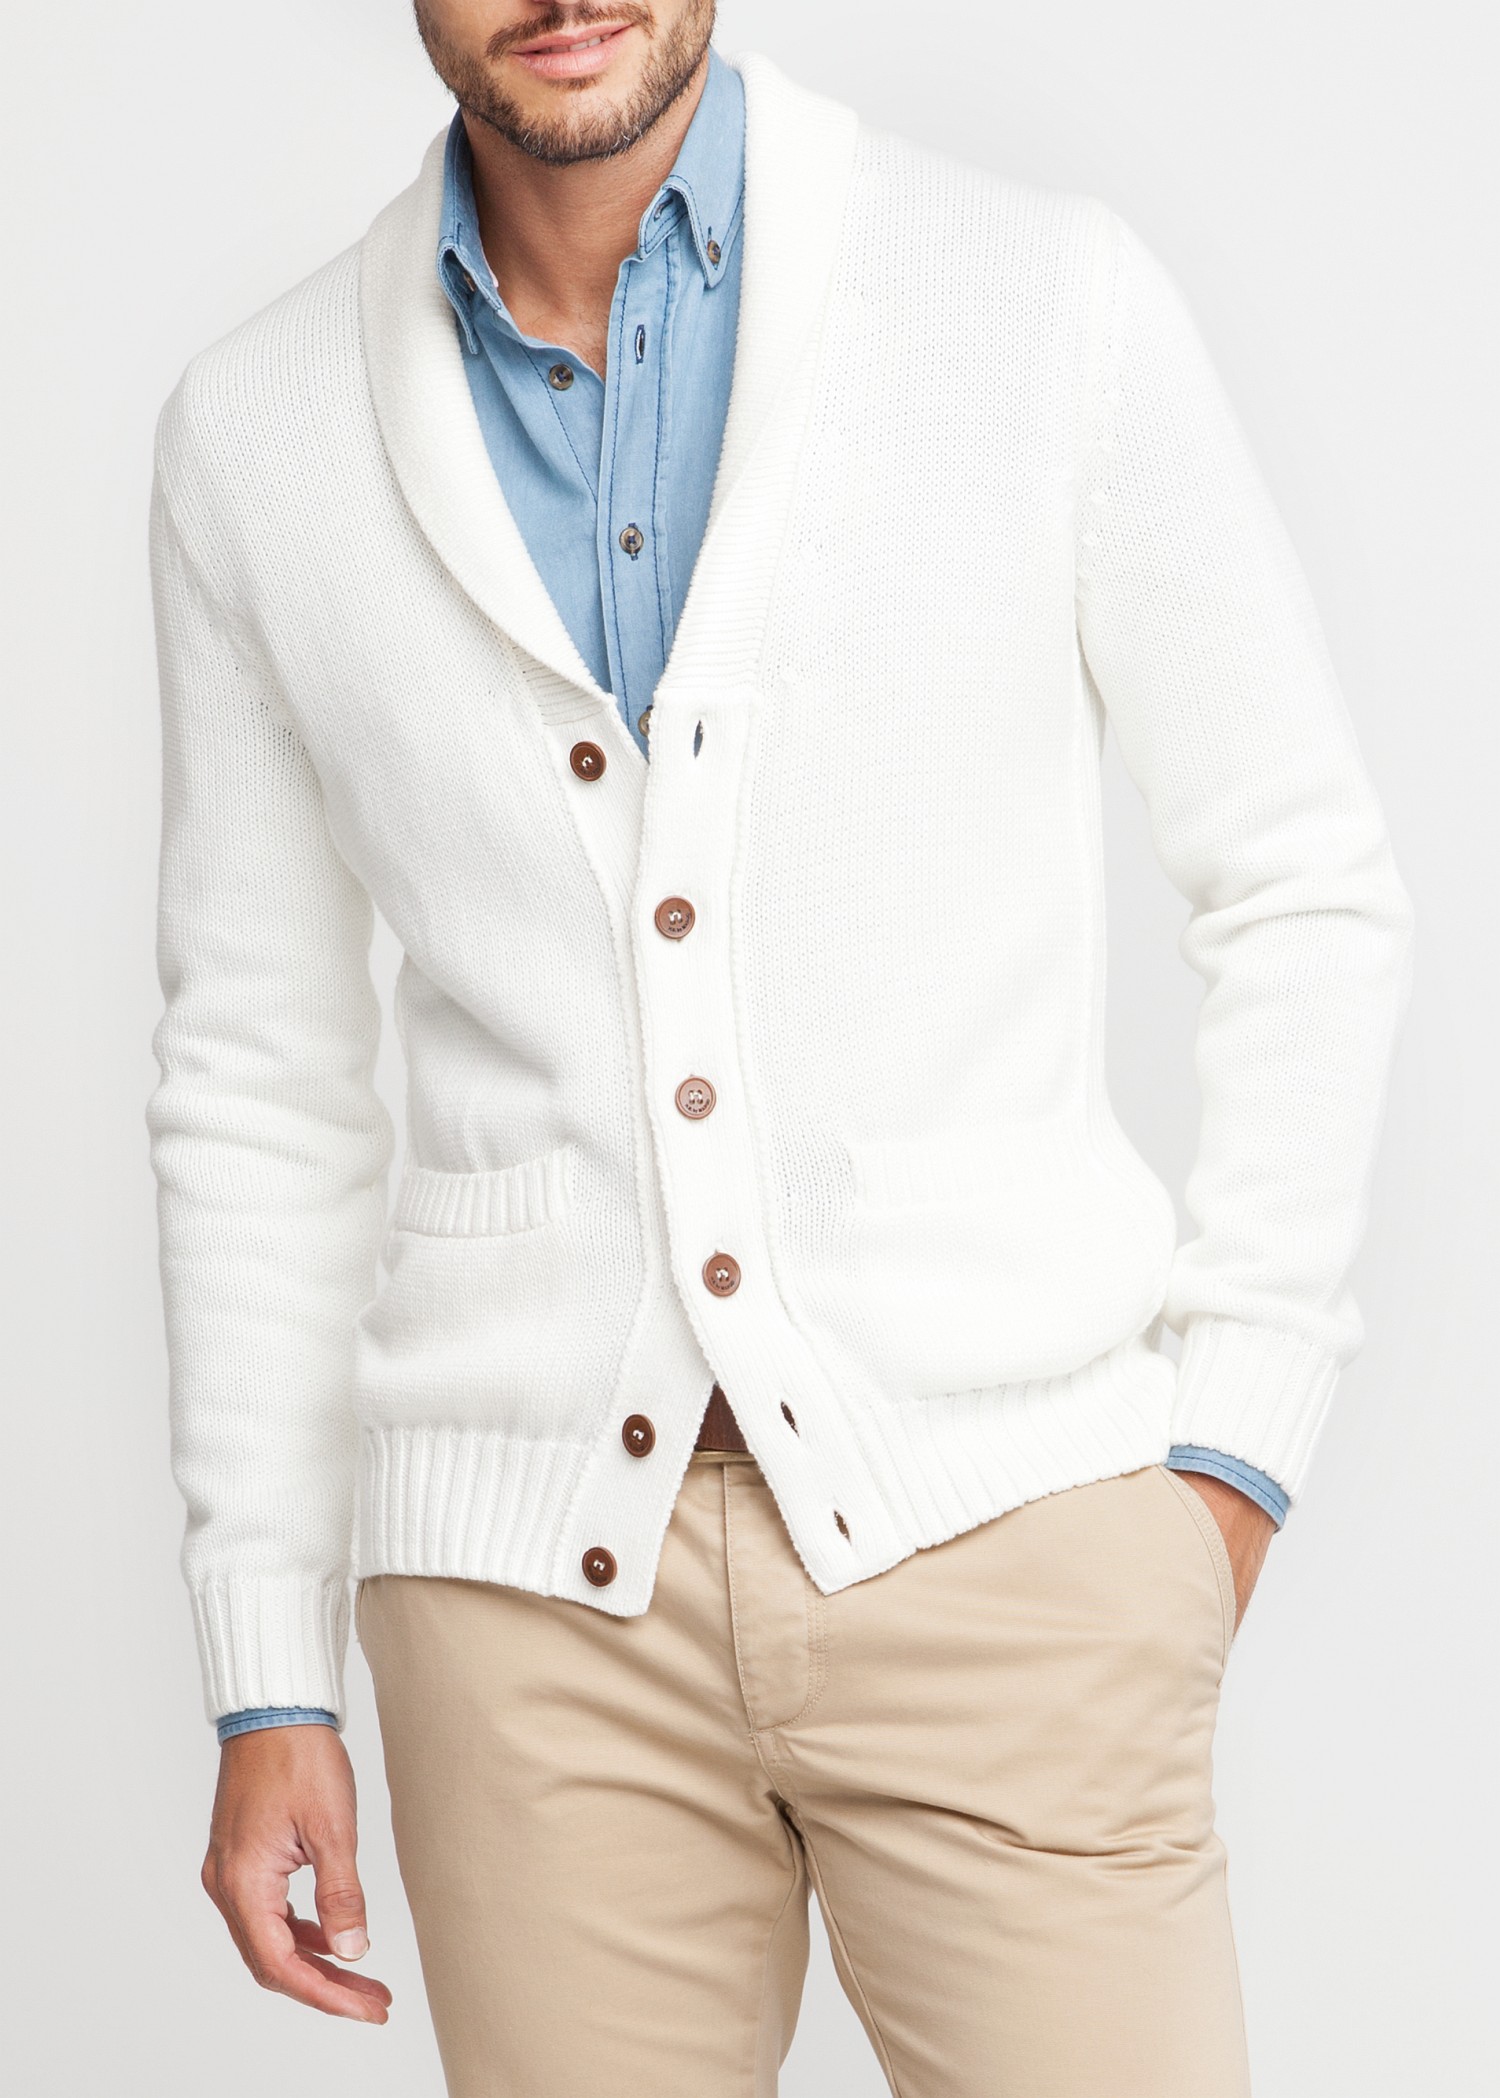 Lyst - Mango Shawl Collar Cotton Cardigan in White for Men